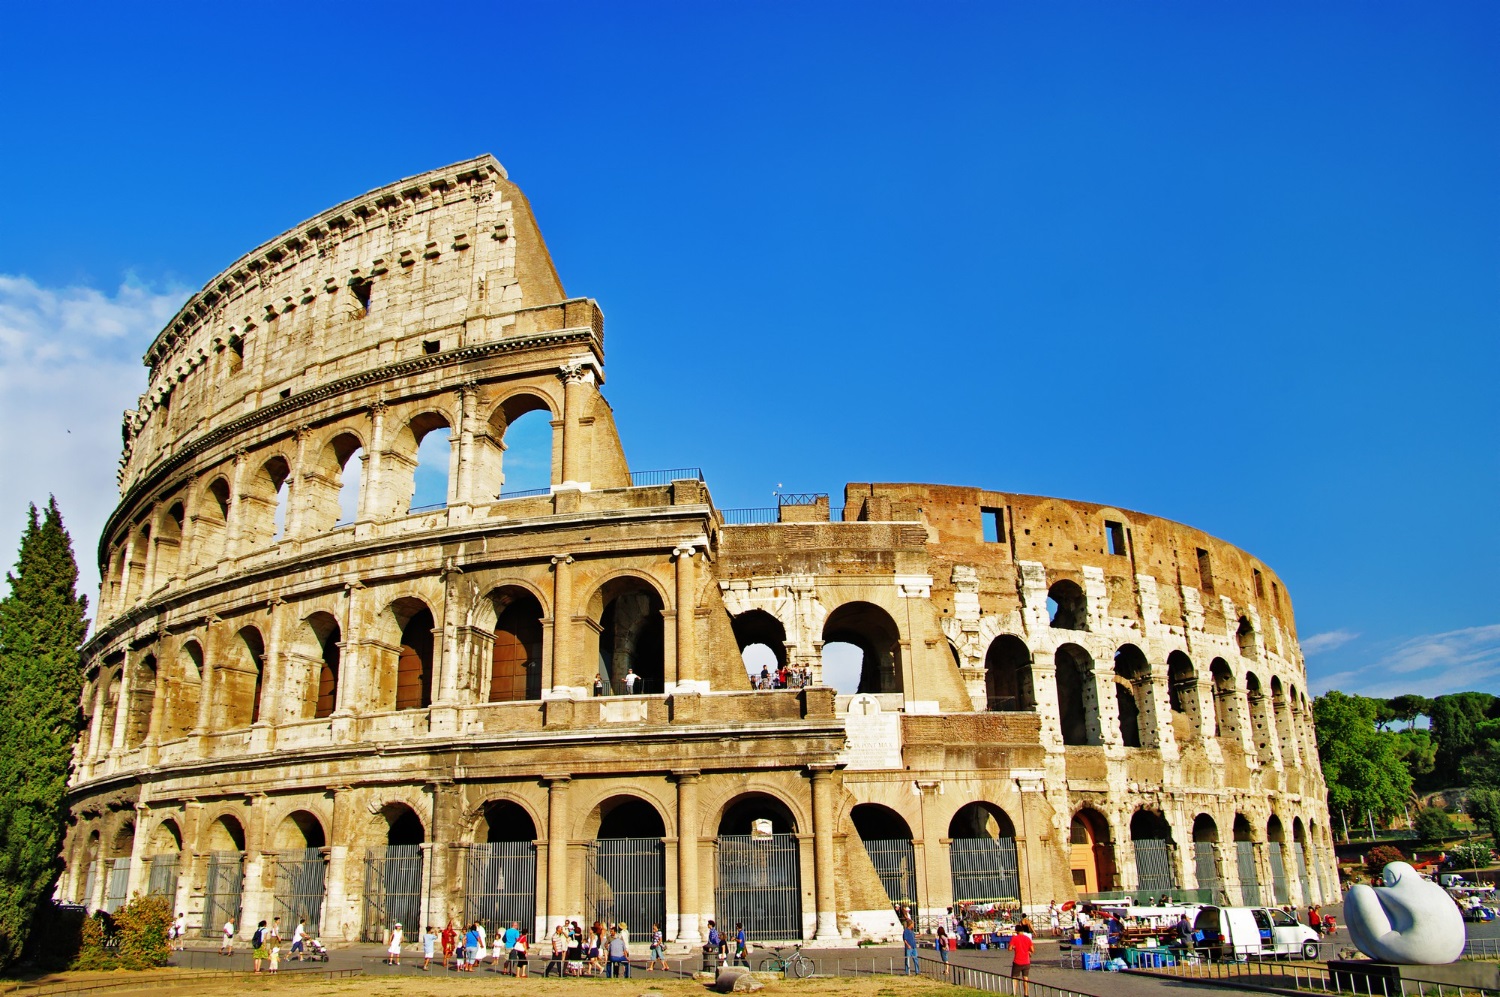 Puzzle Coliseo de Roma